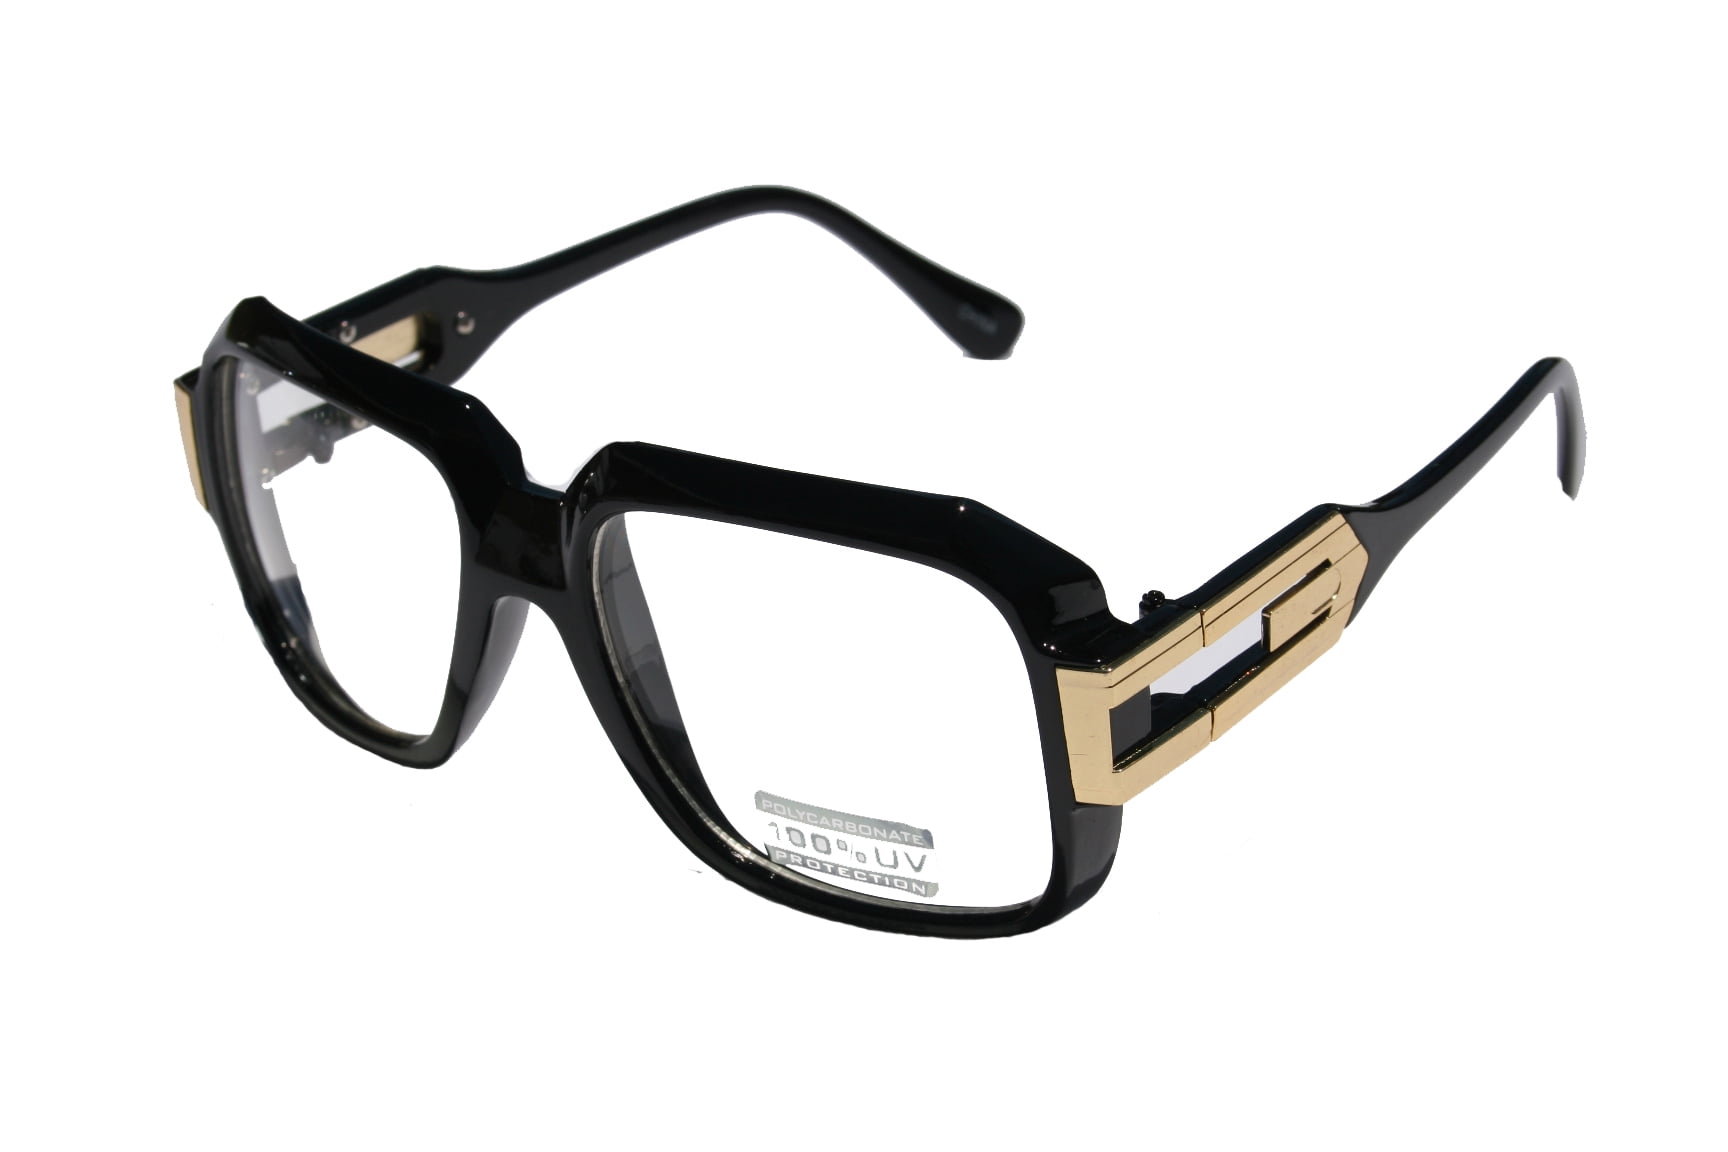 2 Pair Clear frame Clear Lens Square Retro Sun Glasses Gold Metal Accents dmc 